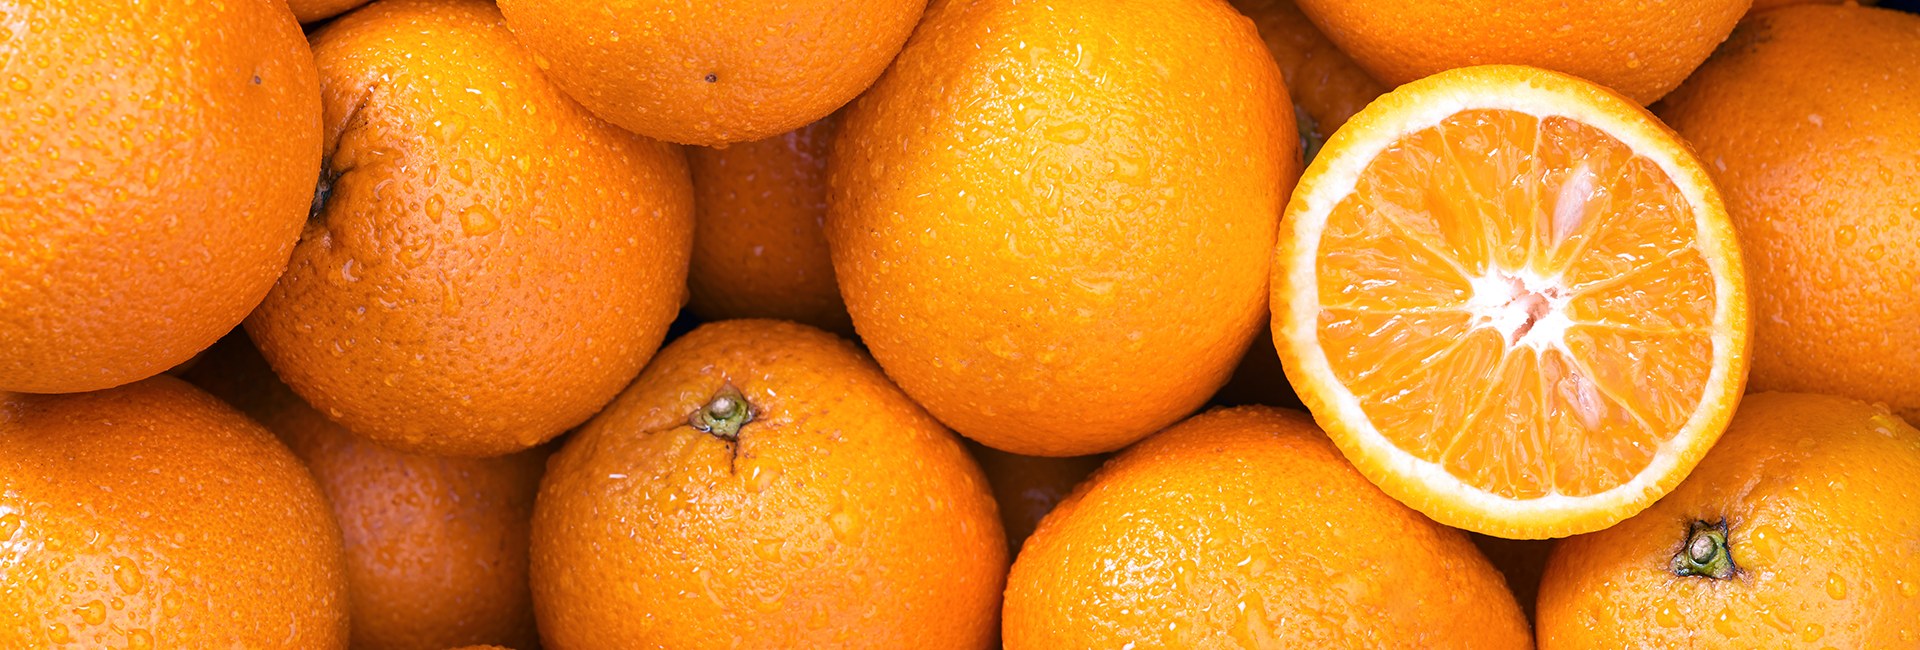 Sagra dell’arancia